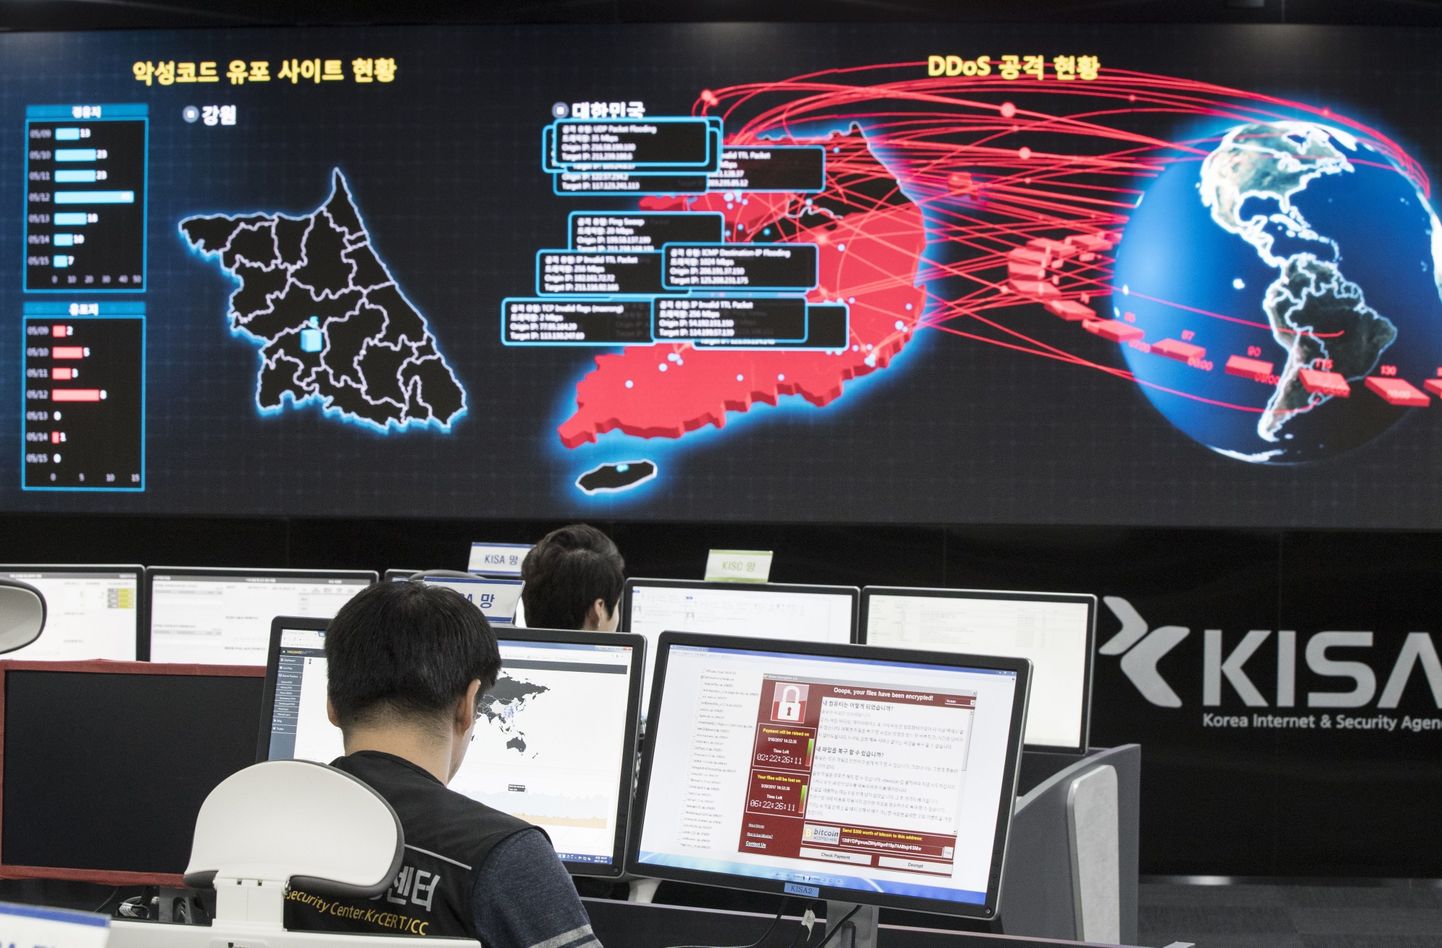 Korea internetiturvalisuse agentuuris jälgiti WannaCry levikut reaalajas